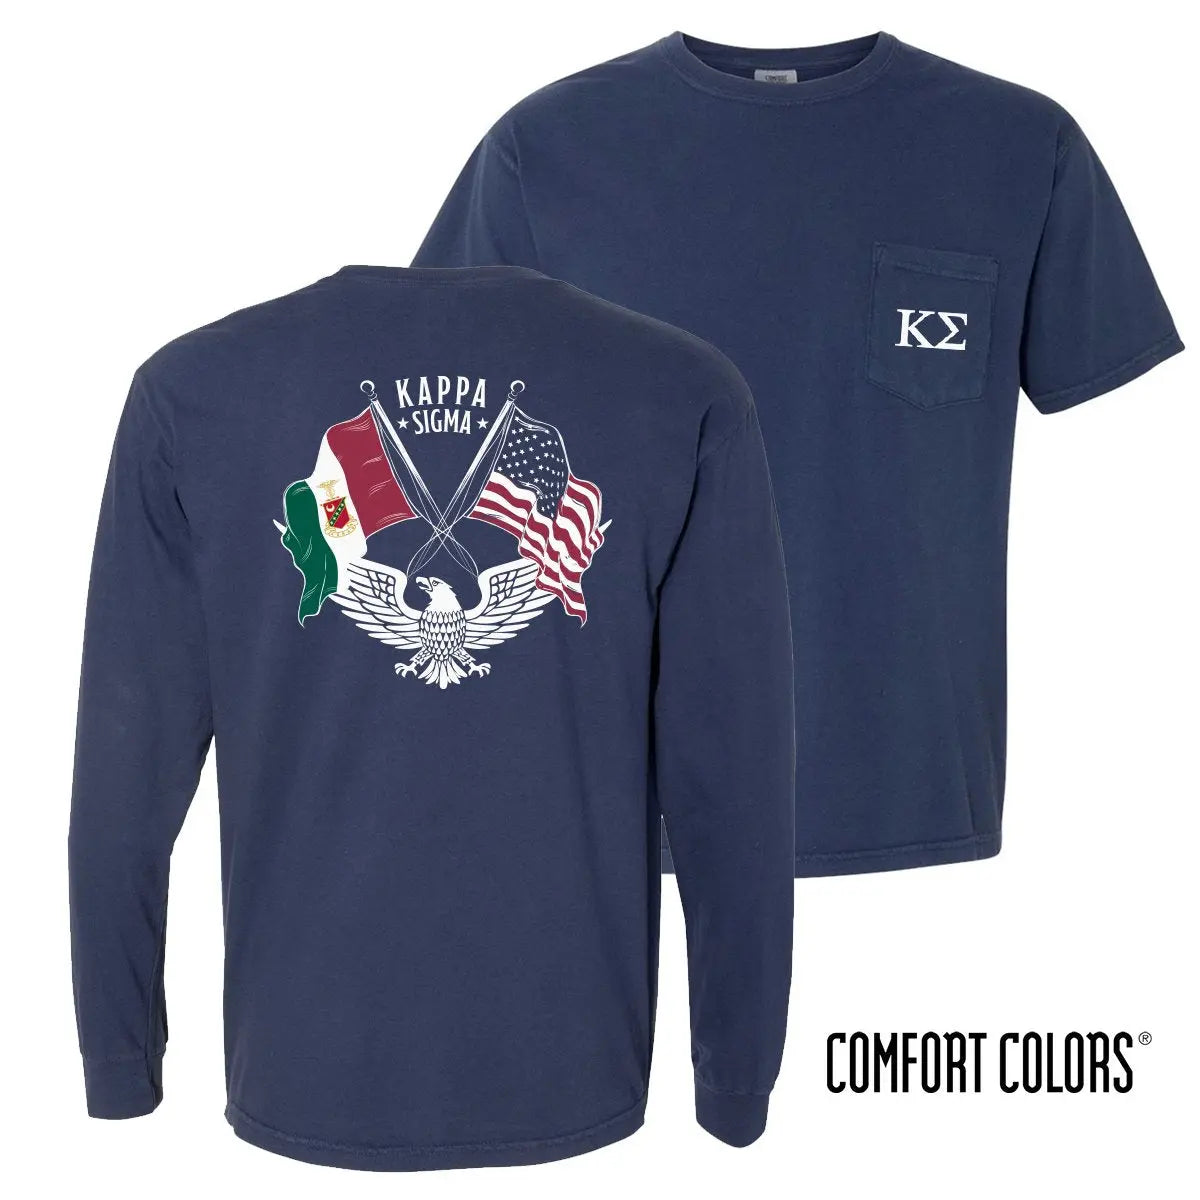 Long tee Kappa Sleeve Kappa Sigma Colors Comfort Official Store Sig Patriot Navy –